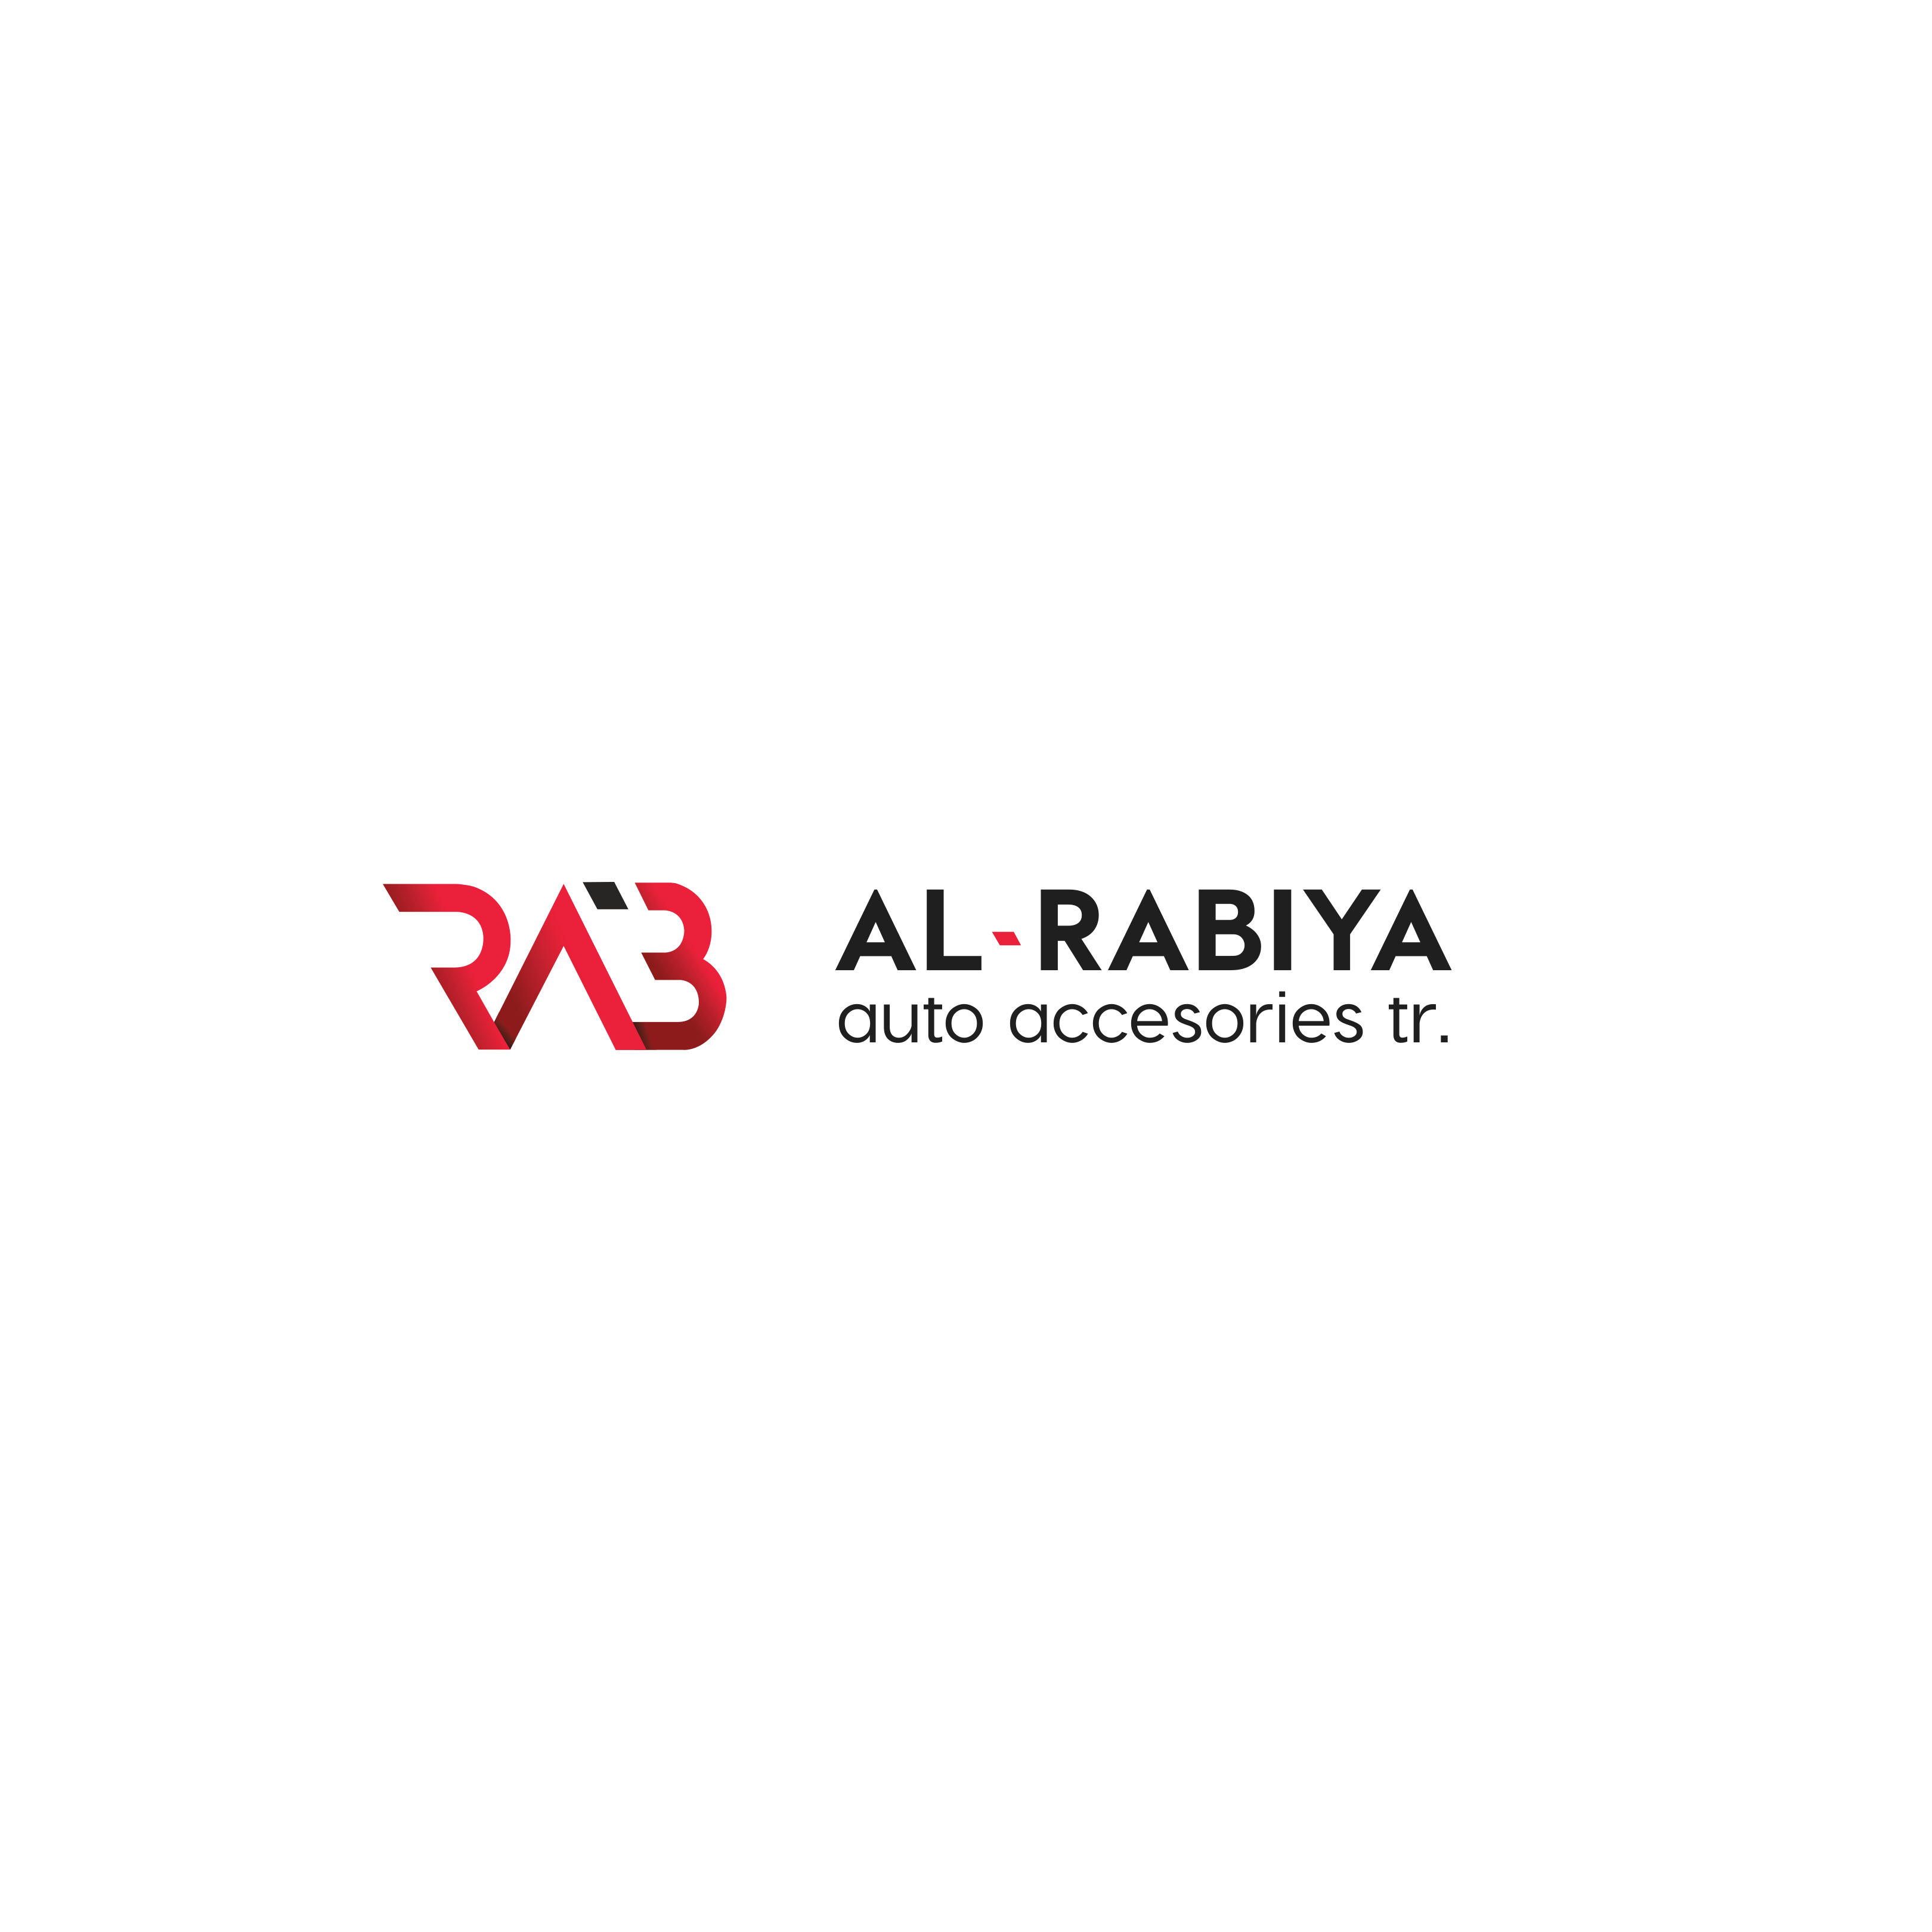 Al-Rabiya Auto Accessories Tr